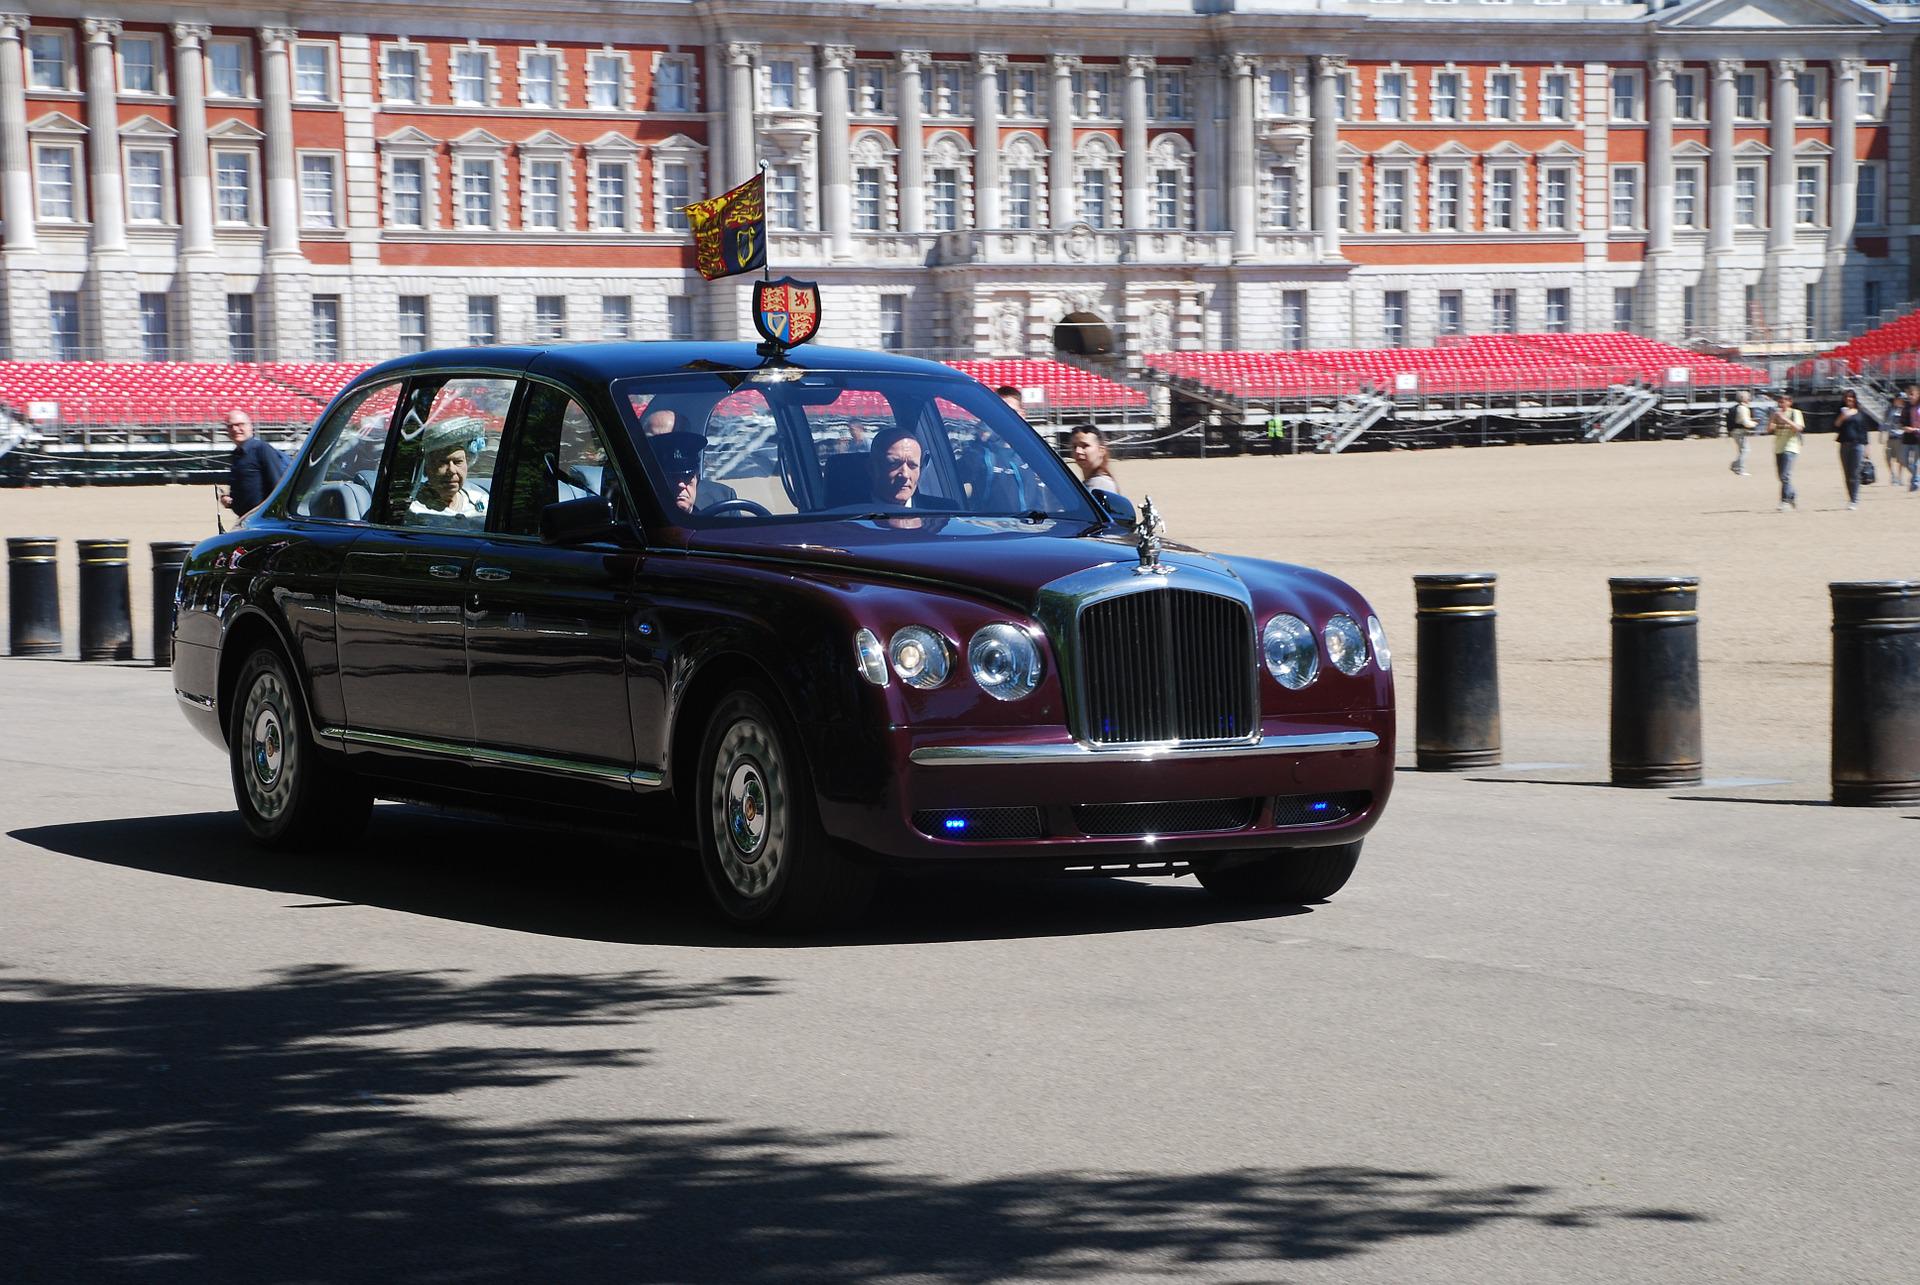 Ratu Elizabeth II saat di mobil (Sumber gambar: LuciaLucy/Pixabay)